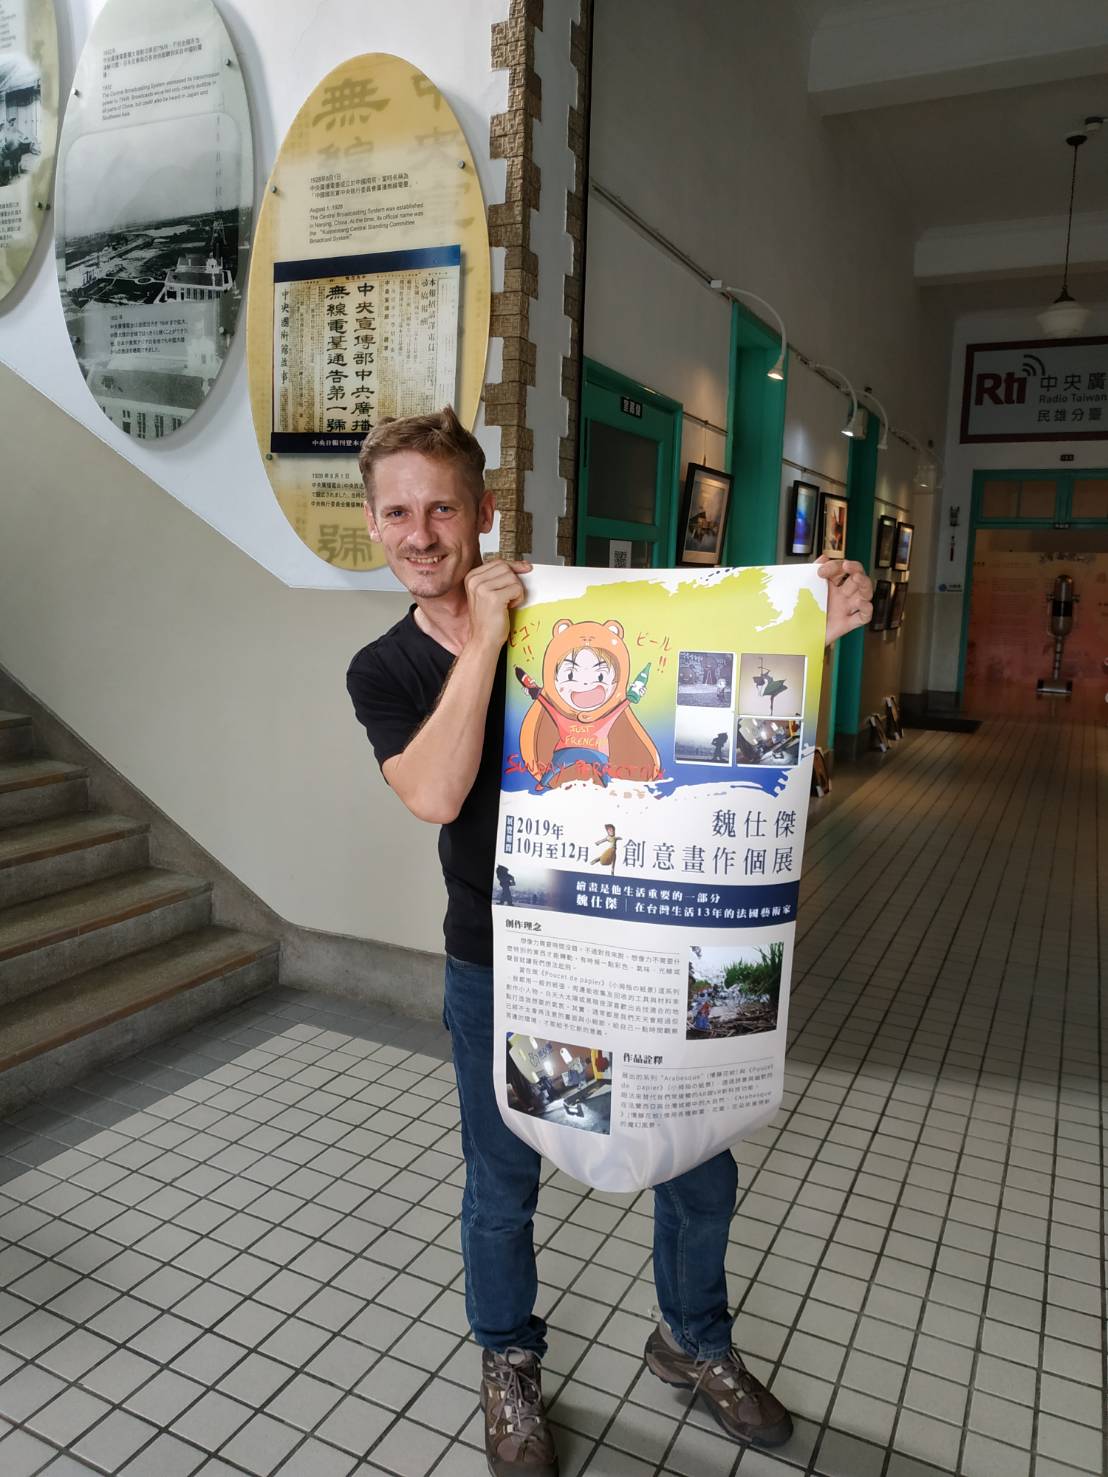 Former Radio Taiwan International French program host Xavier Mehl held personal creative painting exhibition at National Radio Museum.  Attribute: Photo courtesy of Radio Taiwan International